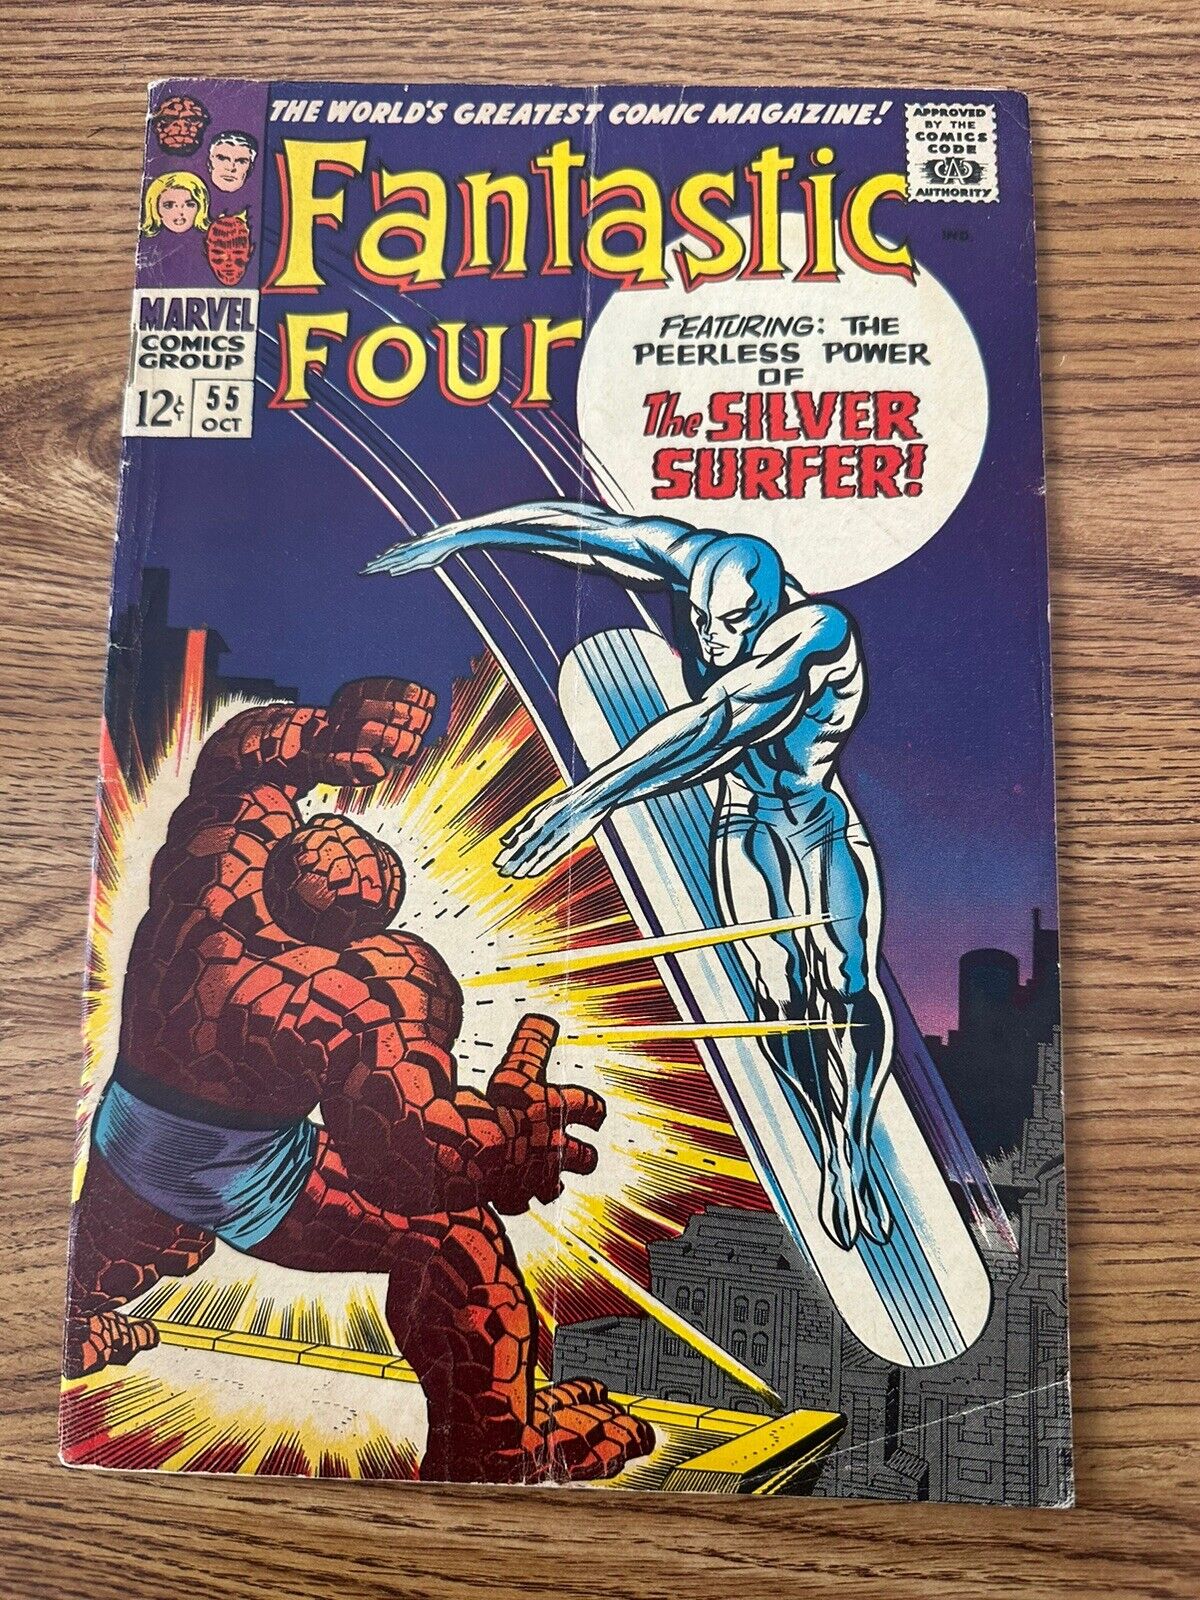 Fantastic Four #55 (1966) Silver Surfer Cover GD+